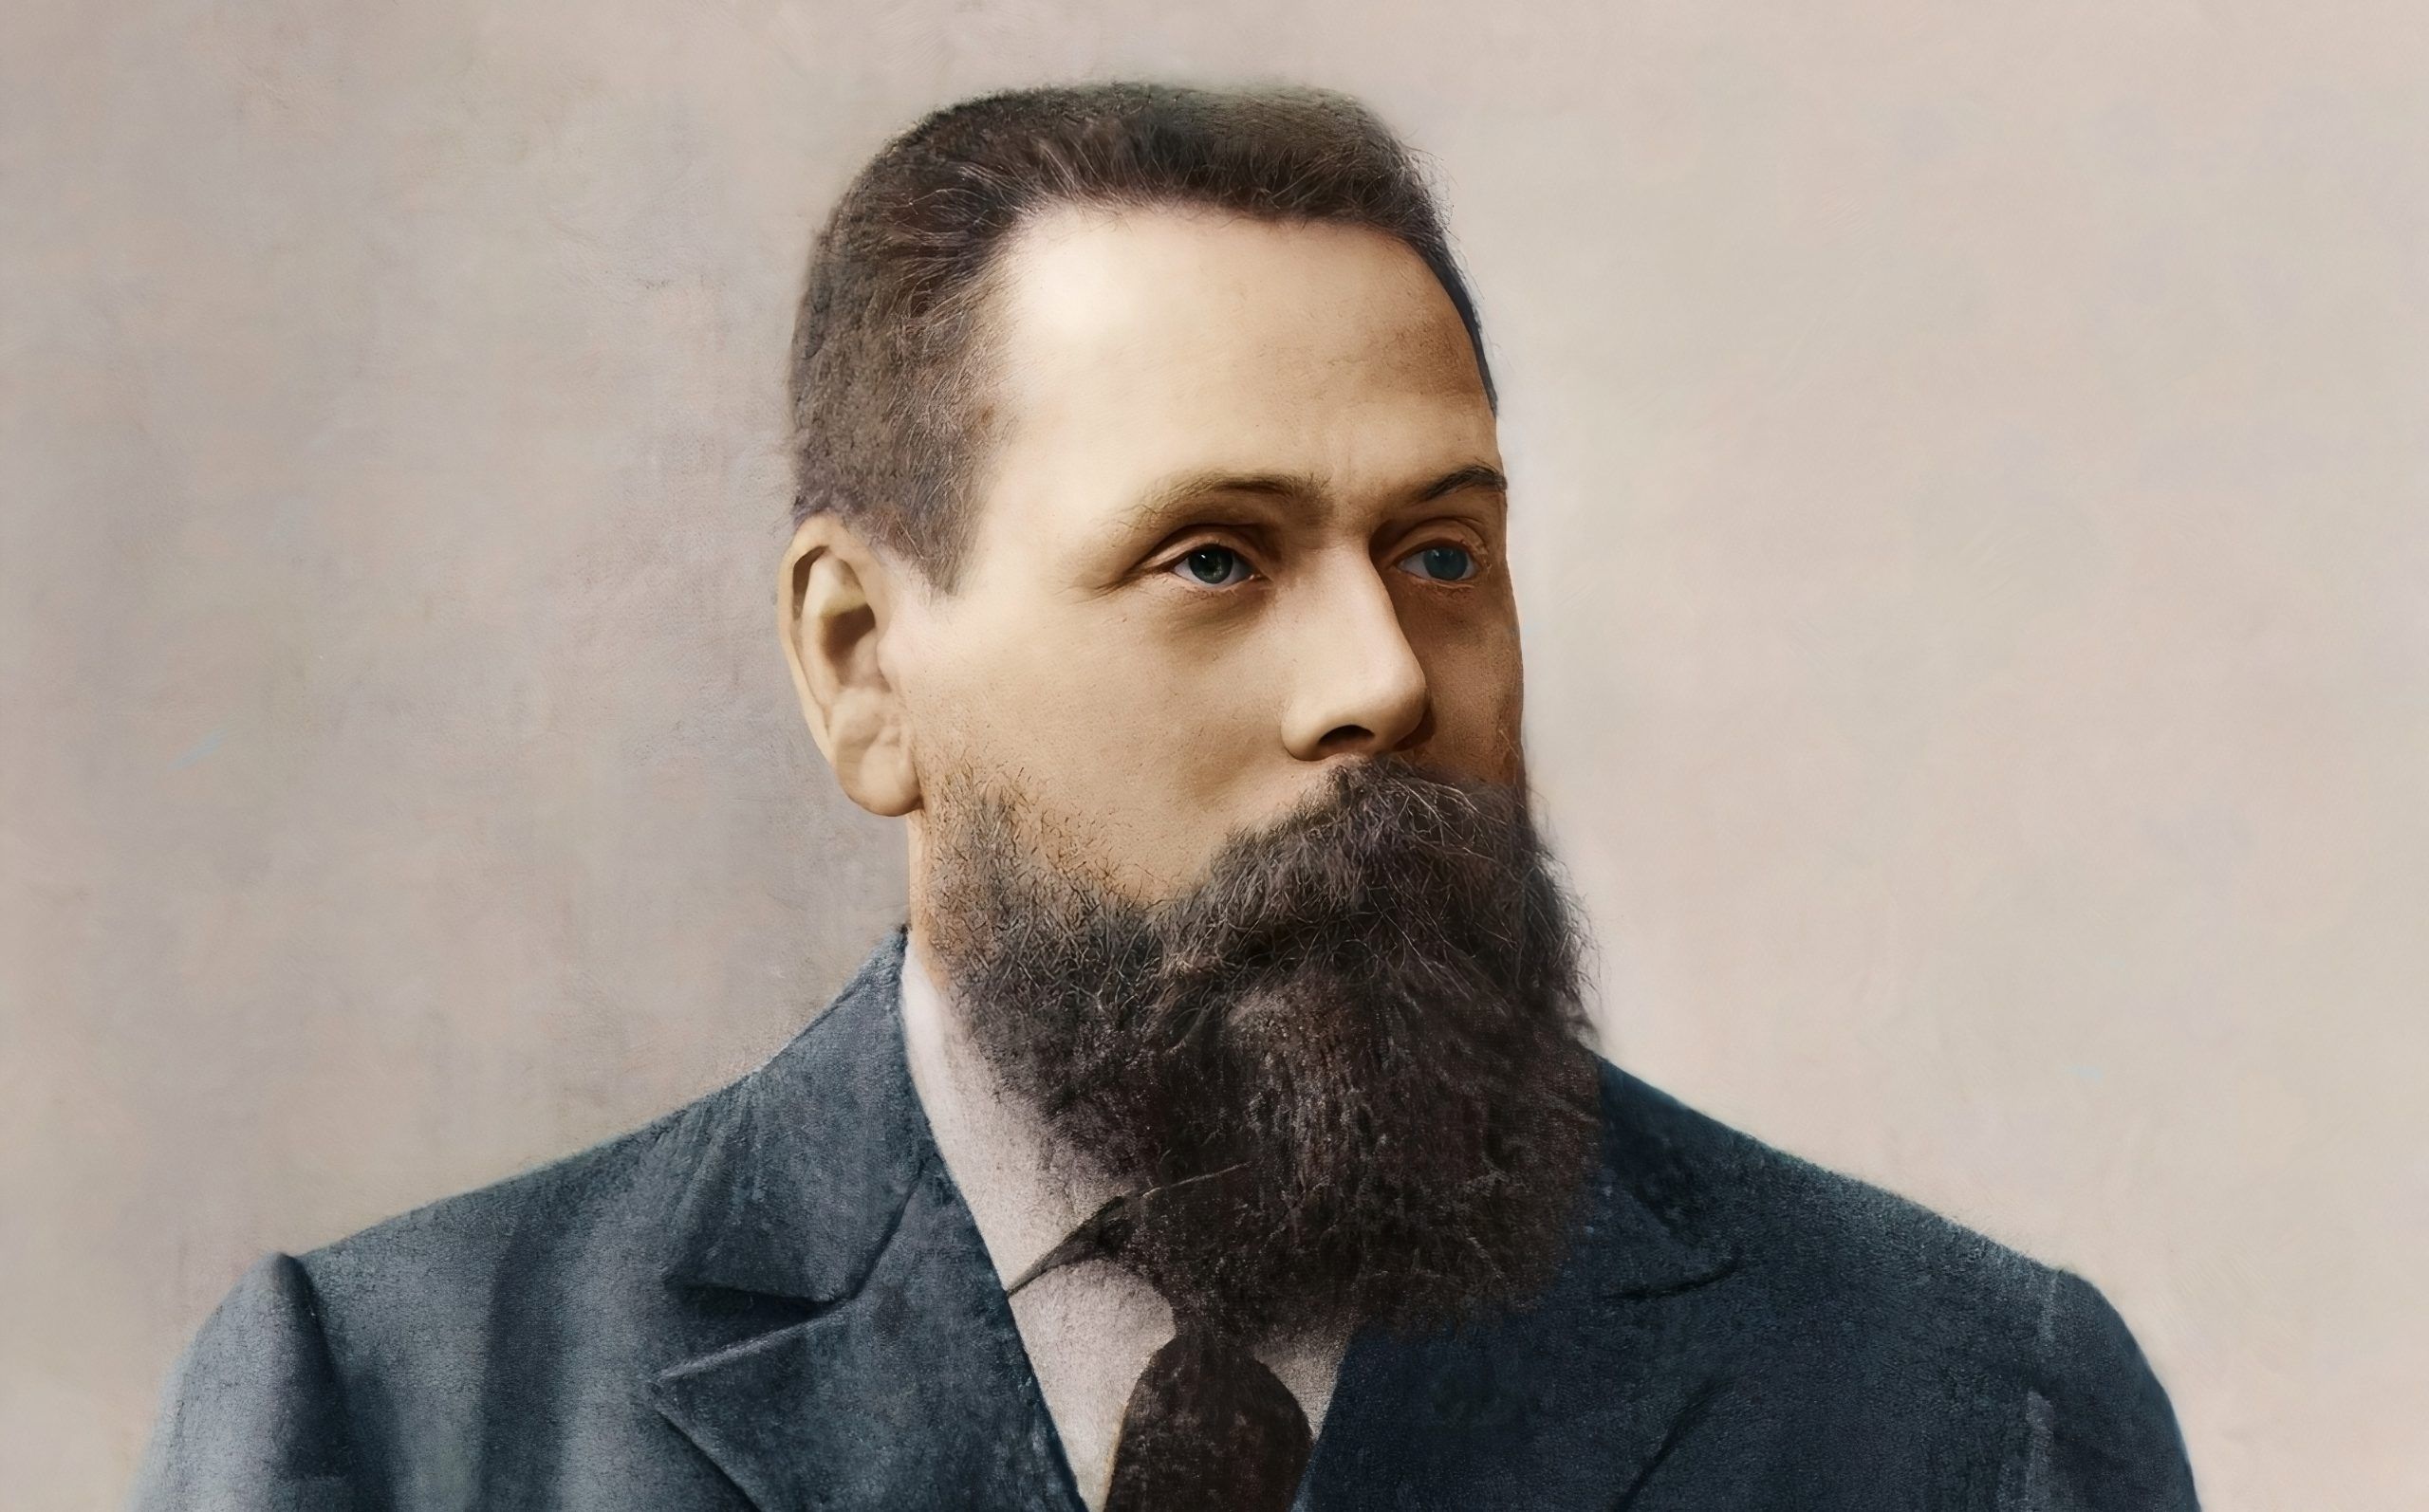 Веселовский Николай Иванович